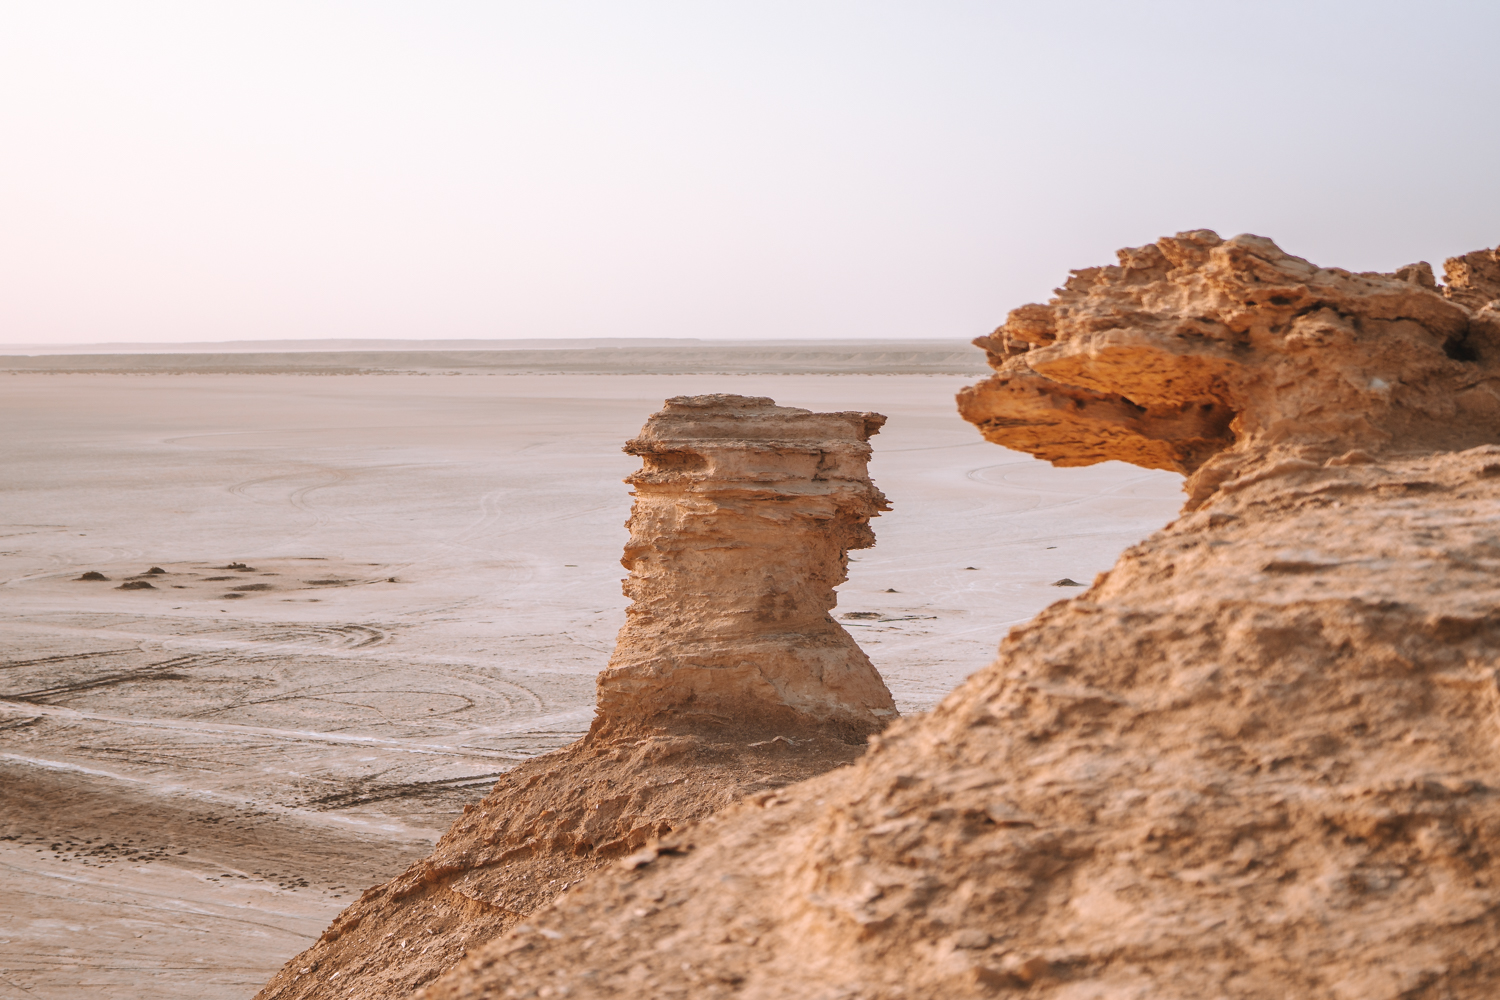 Dunes in Jebil National Park